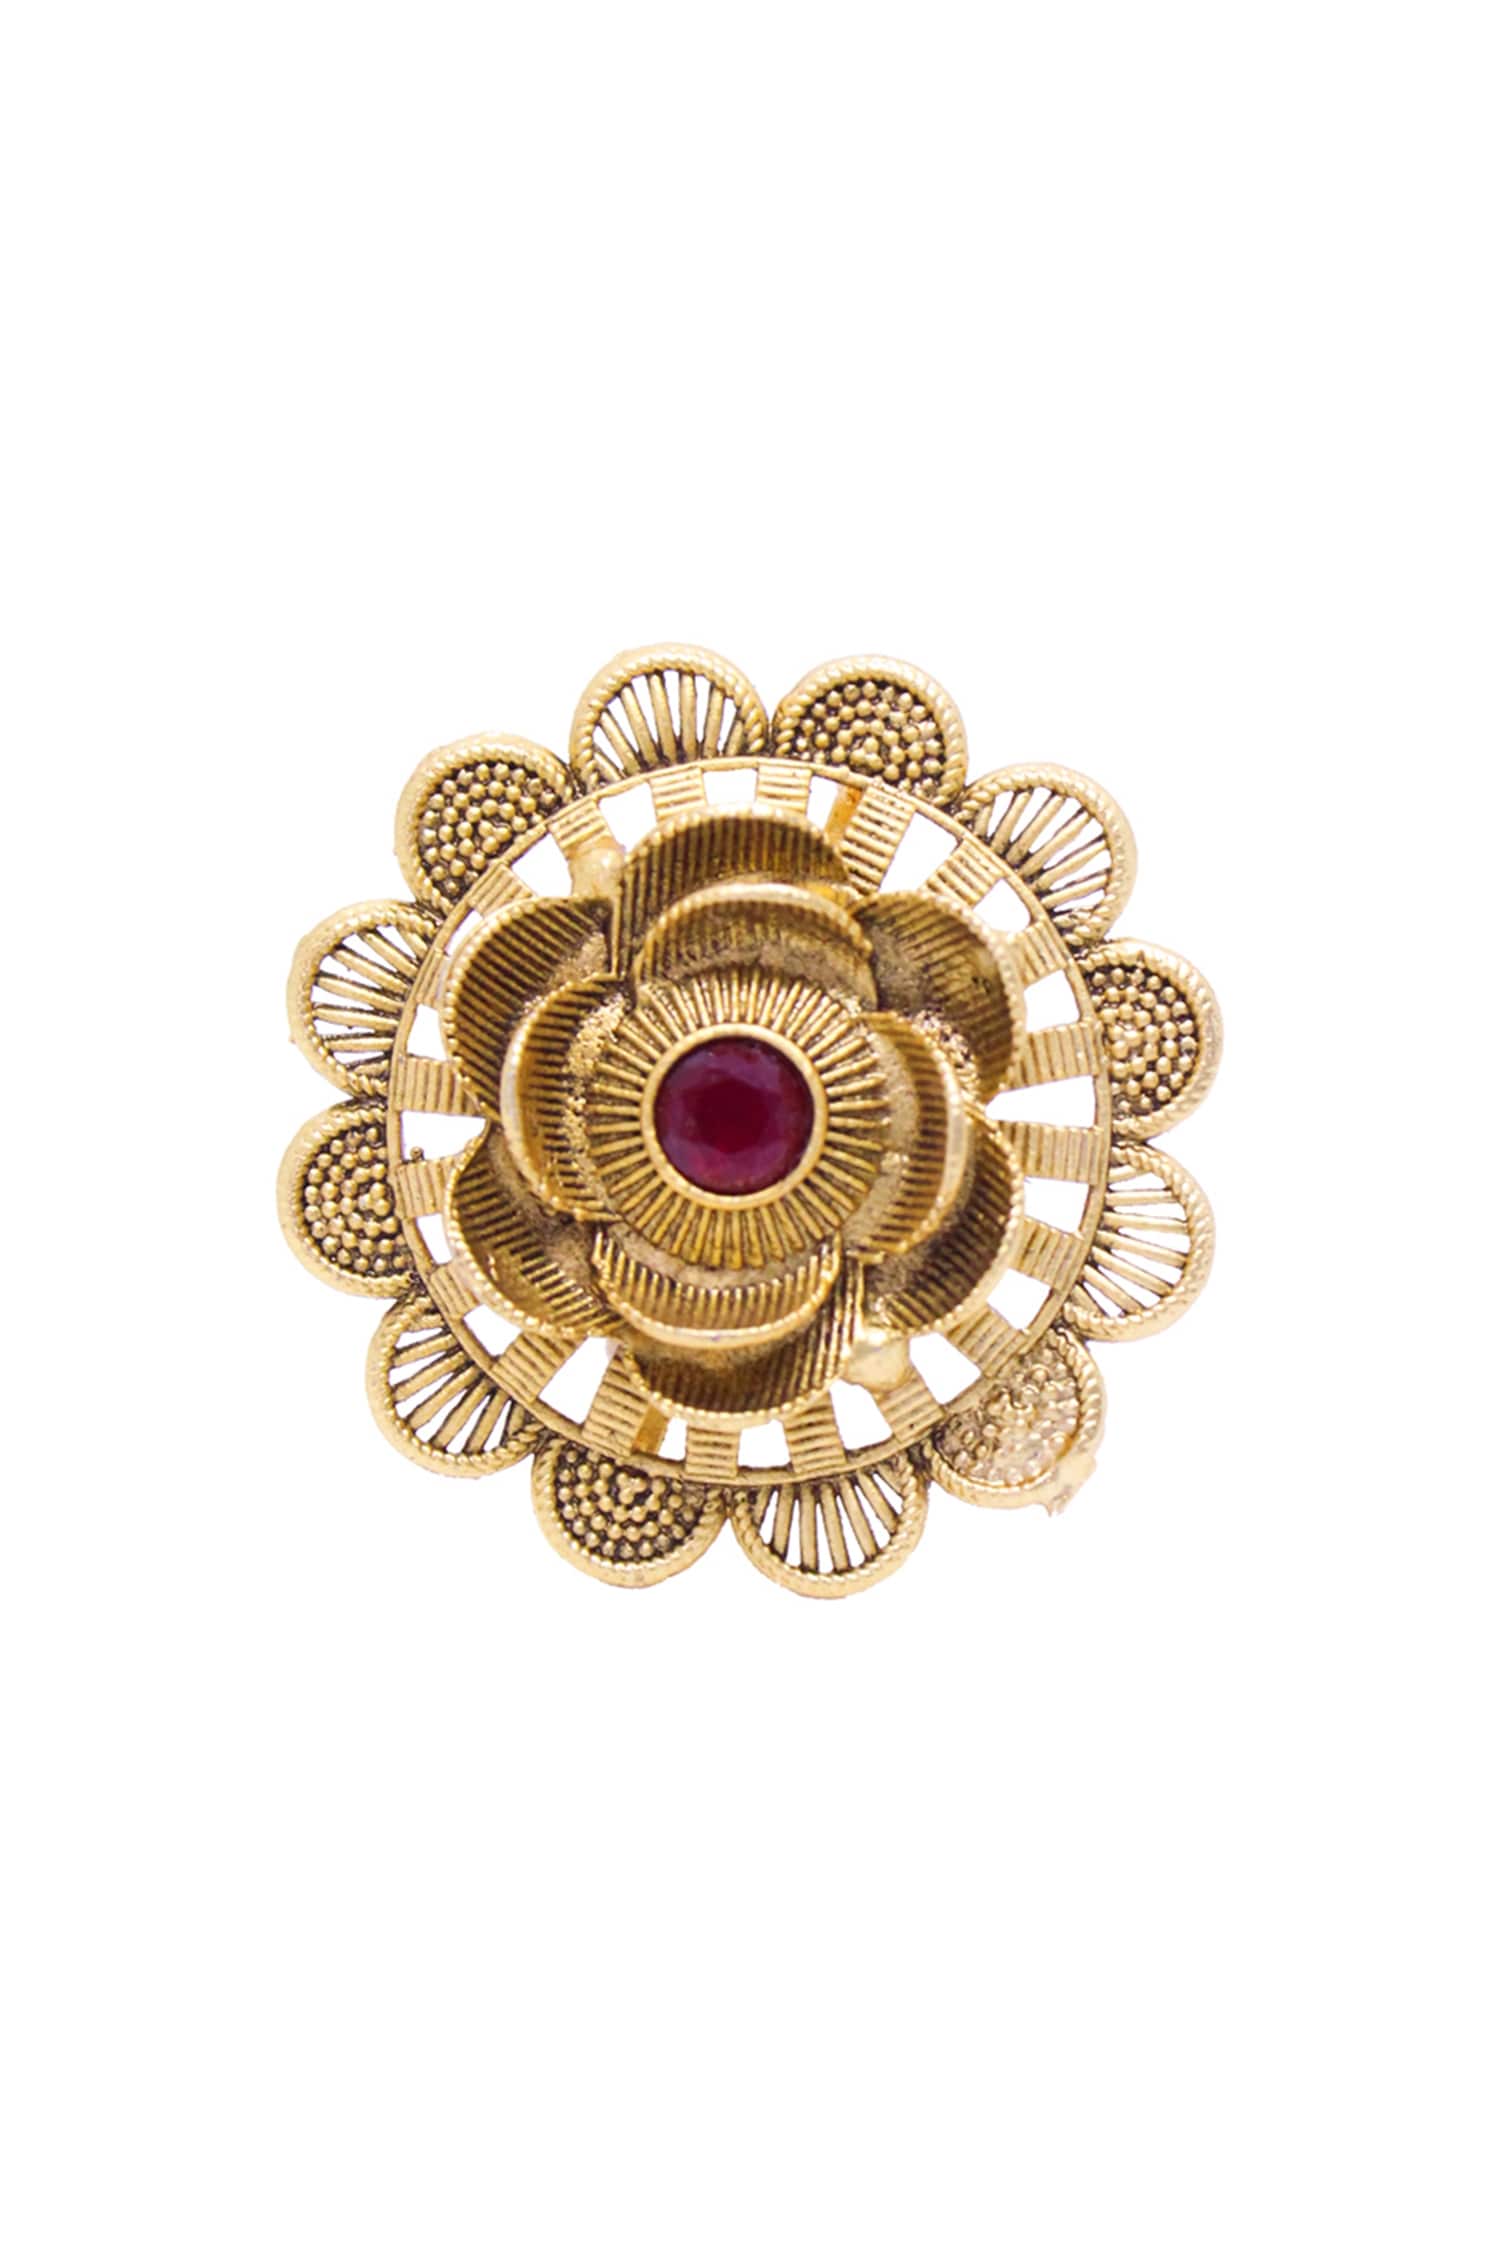 Buy Gold plated Imitation Jewelry Set Designer Bangles NEW - Griiham